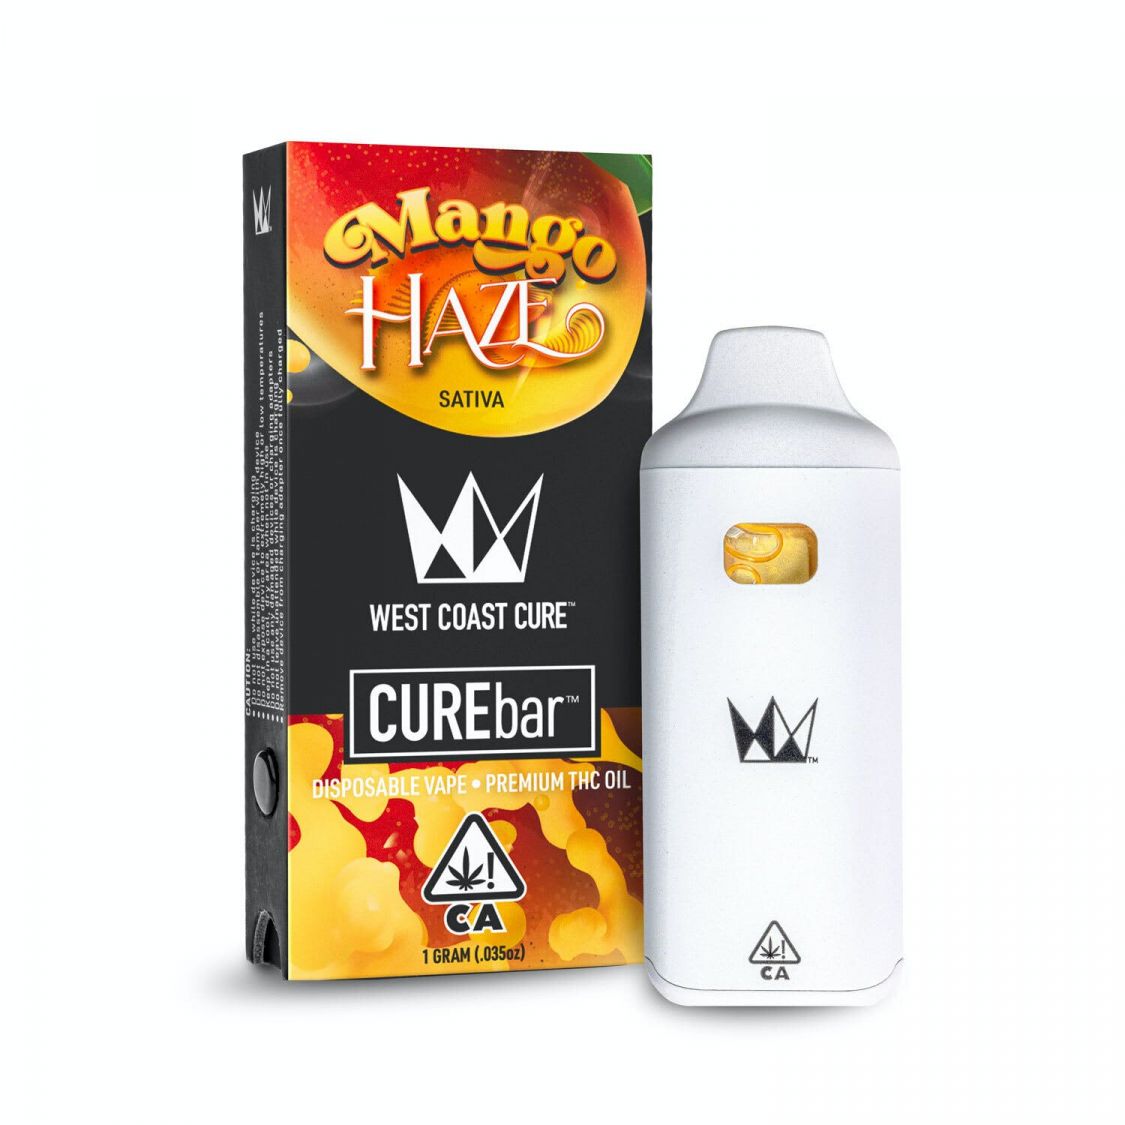 West Coast Cure Mango Haze CUREbar Disposable Vaporizers Disposable